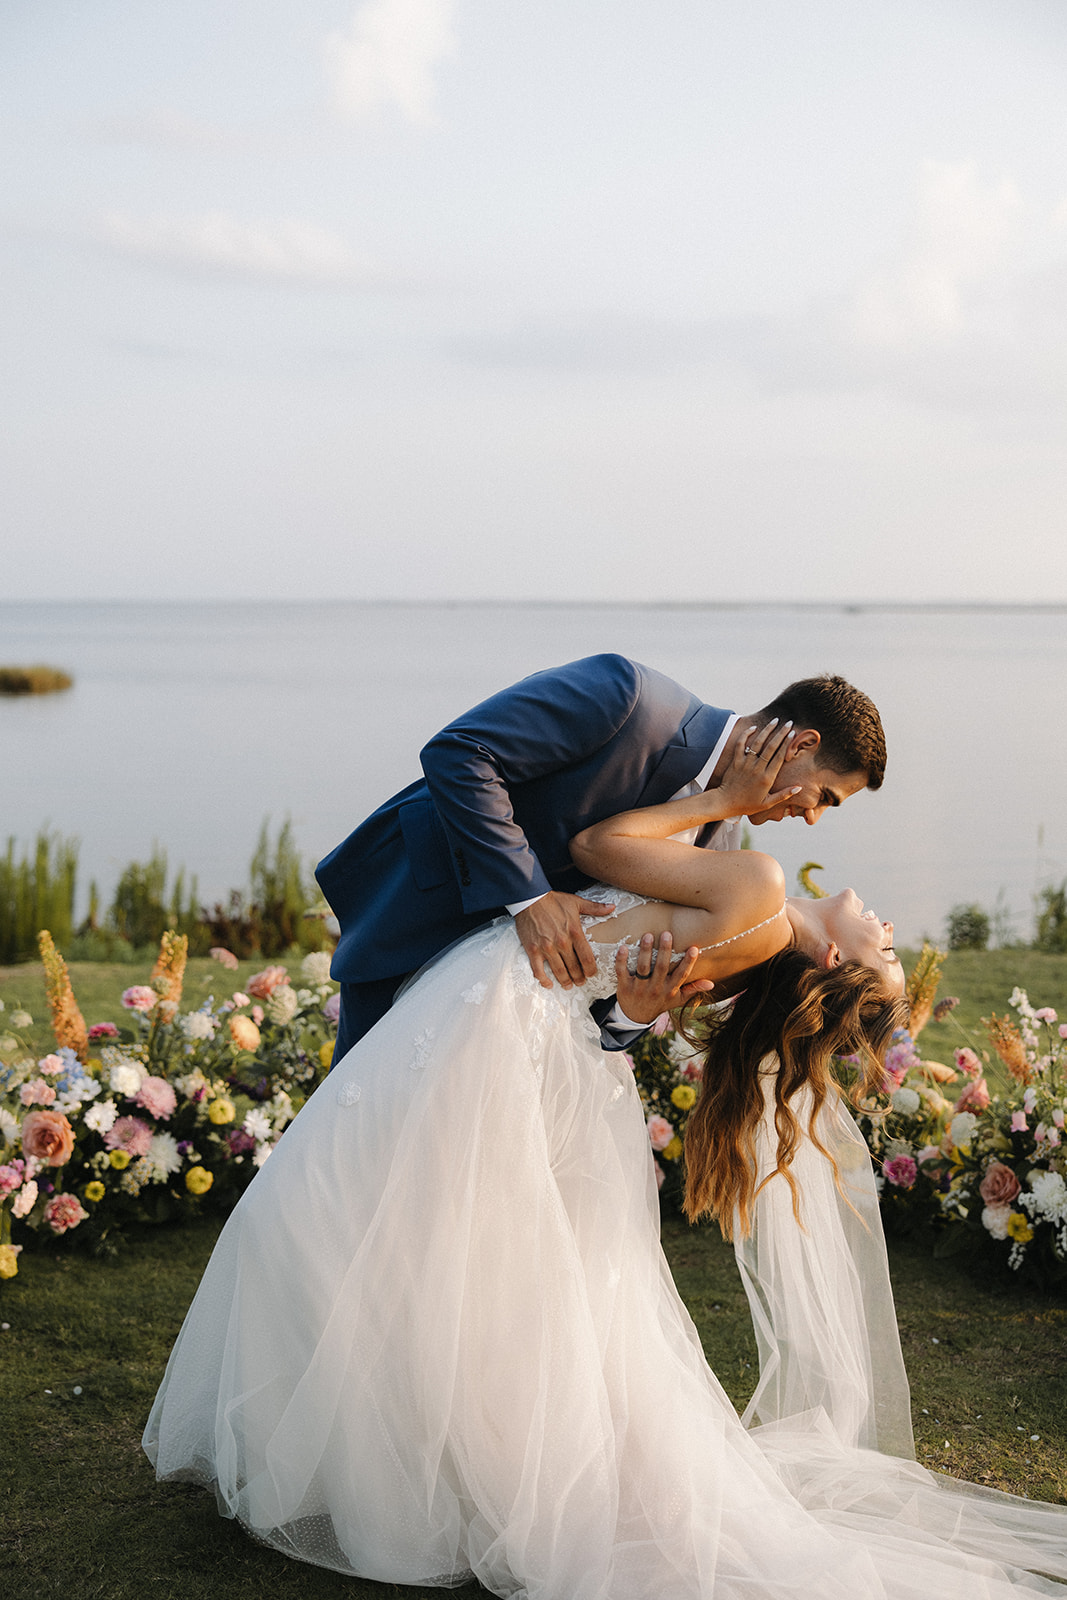 couple embraces beside wedding flowers